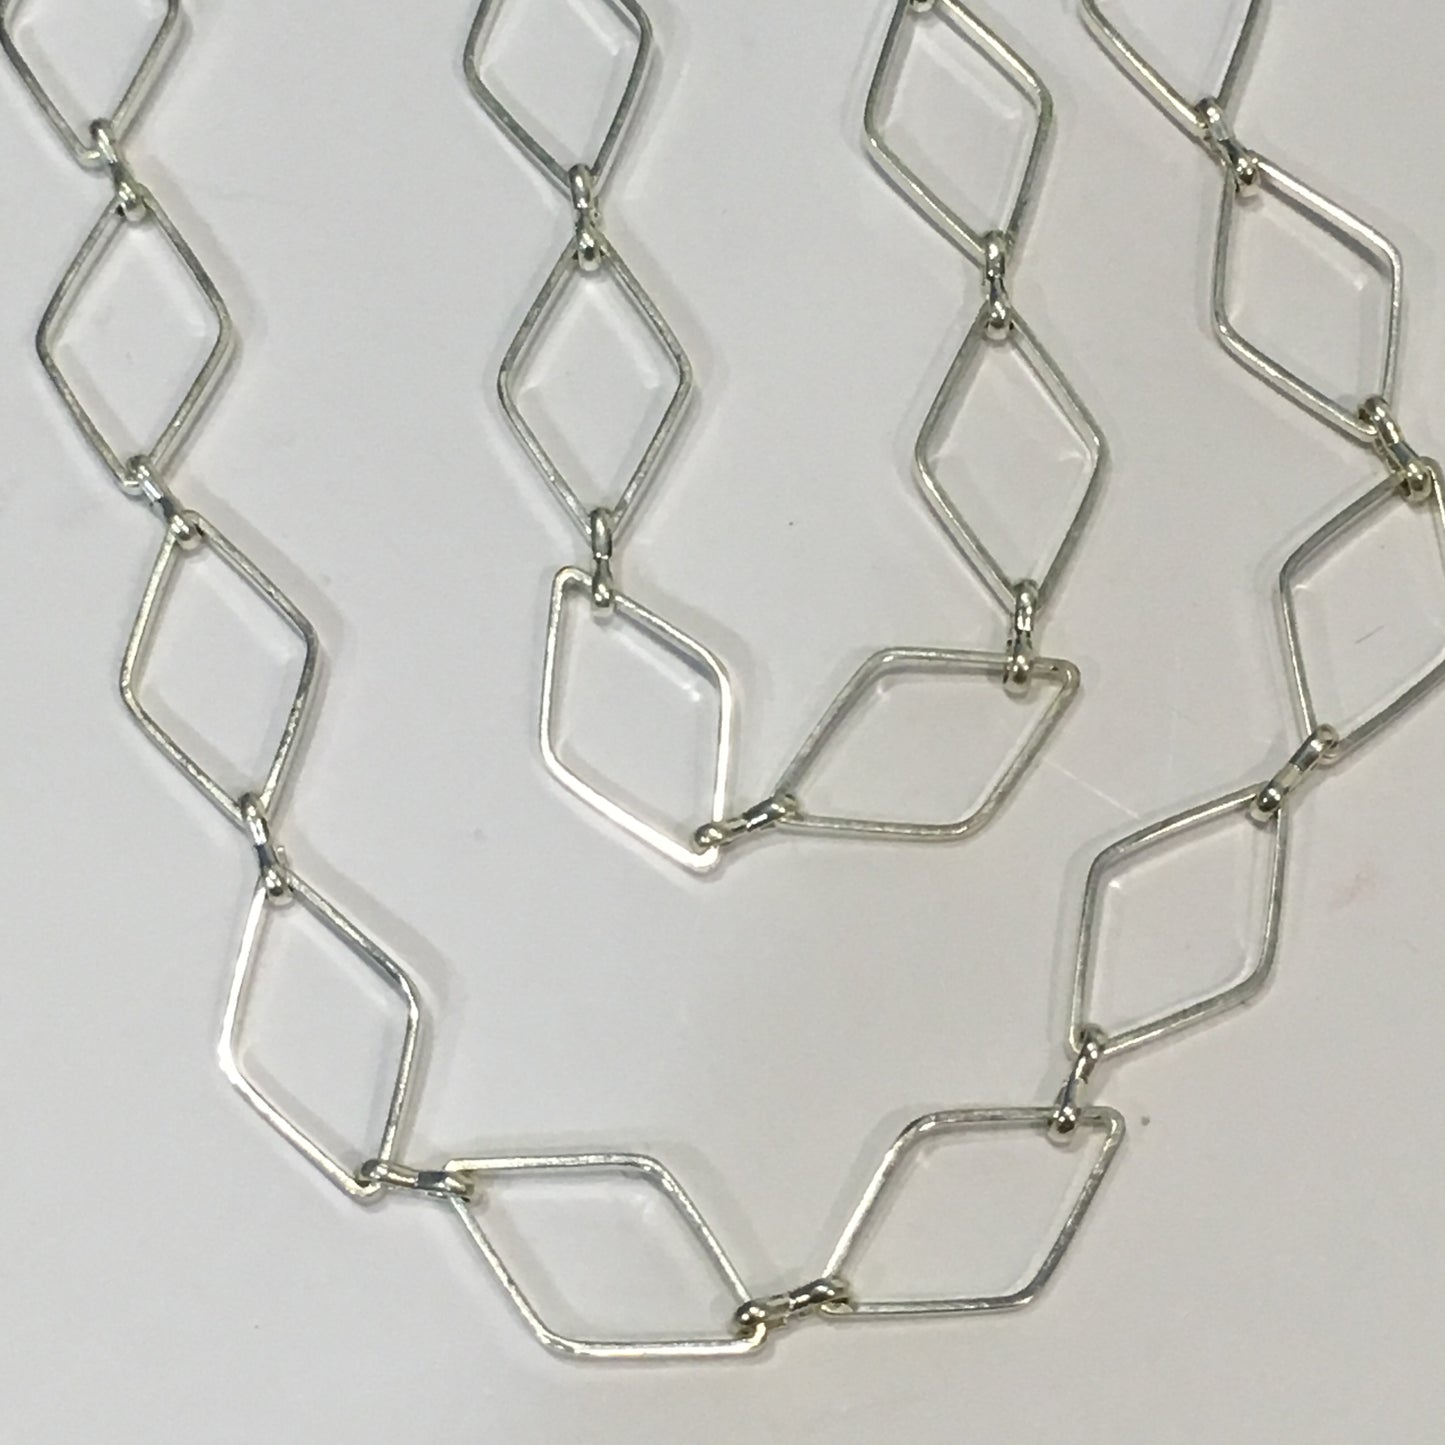 Silver Plated Diamond Chain Links, 16.5 x 10 mm, 43 Links